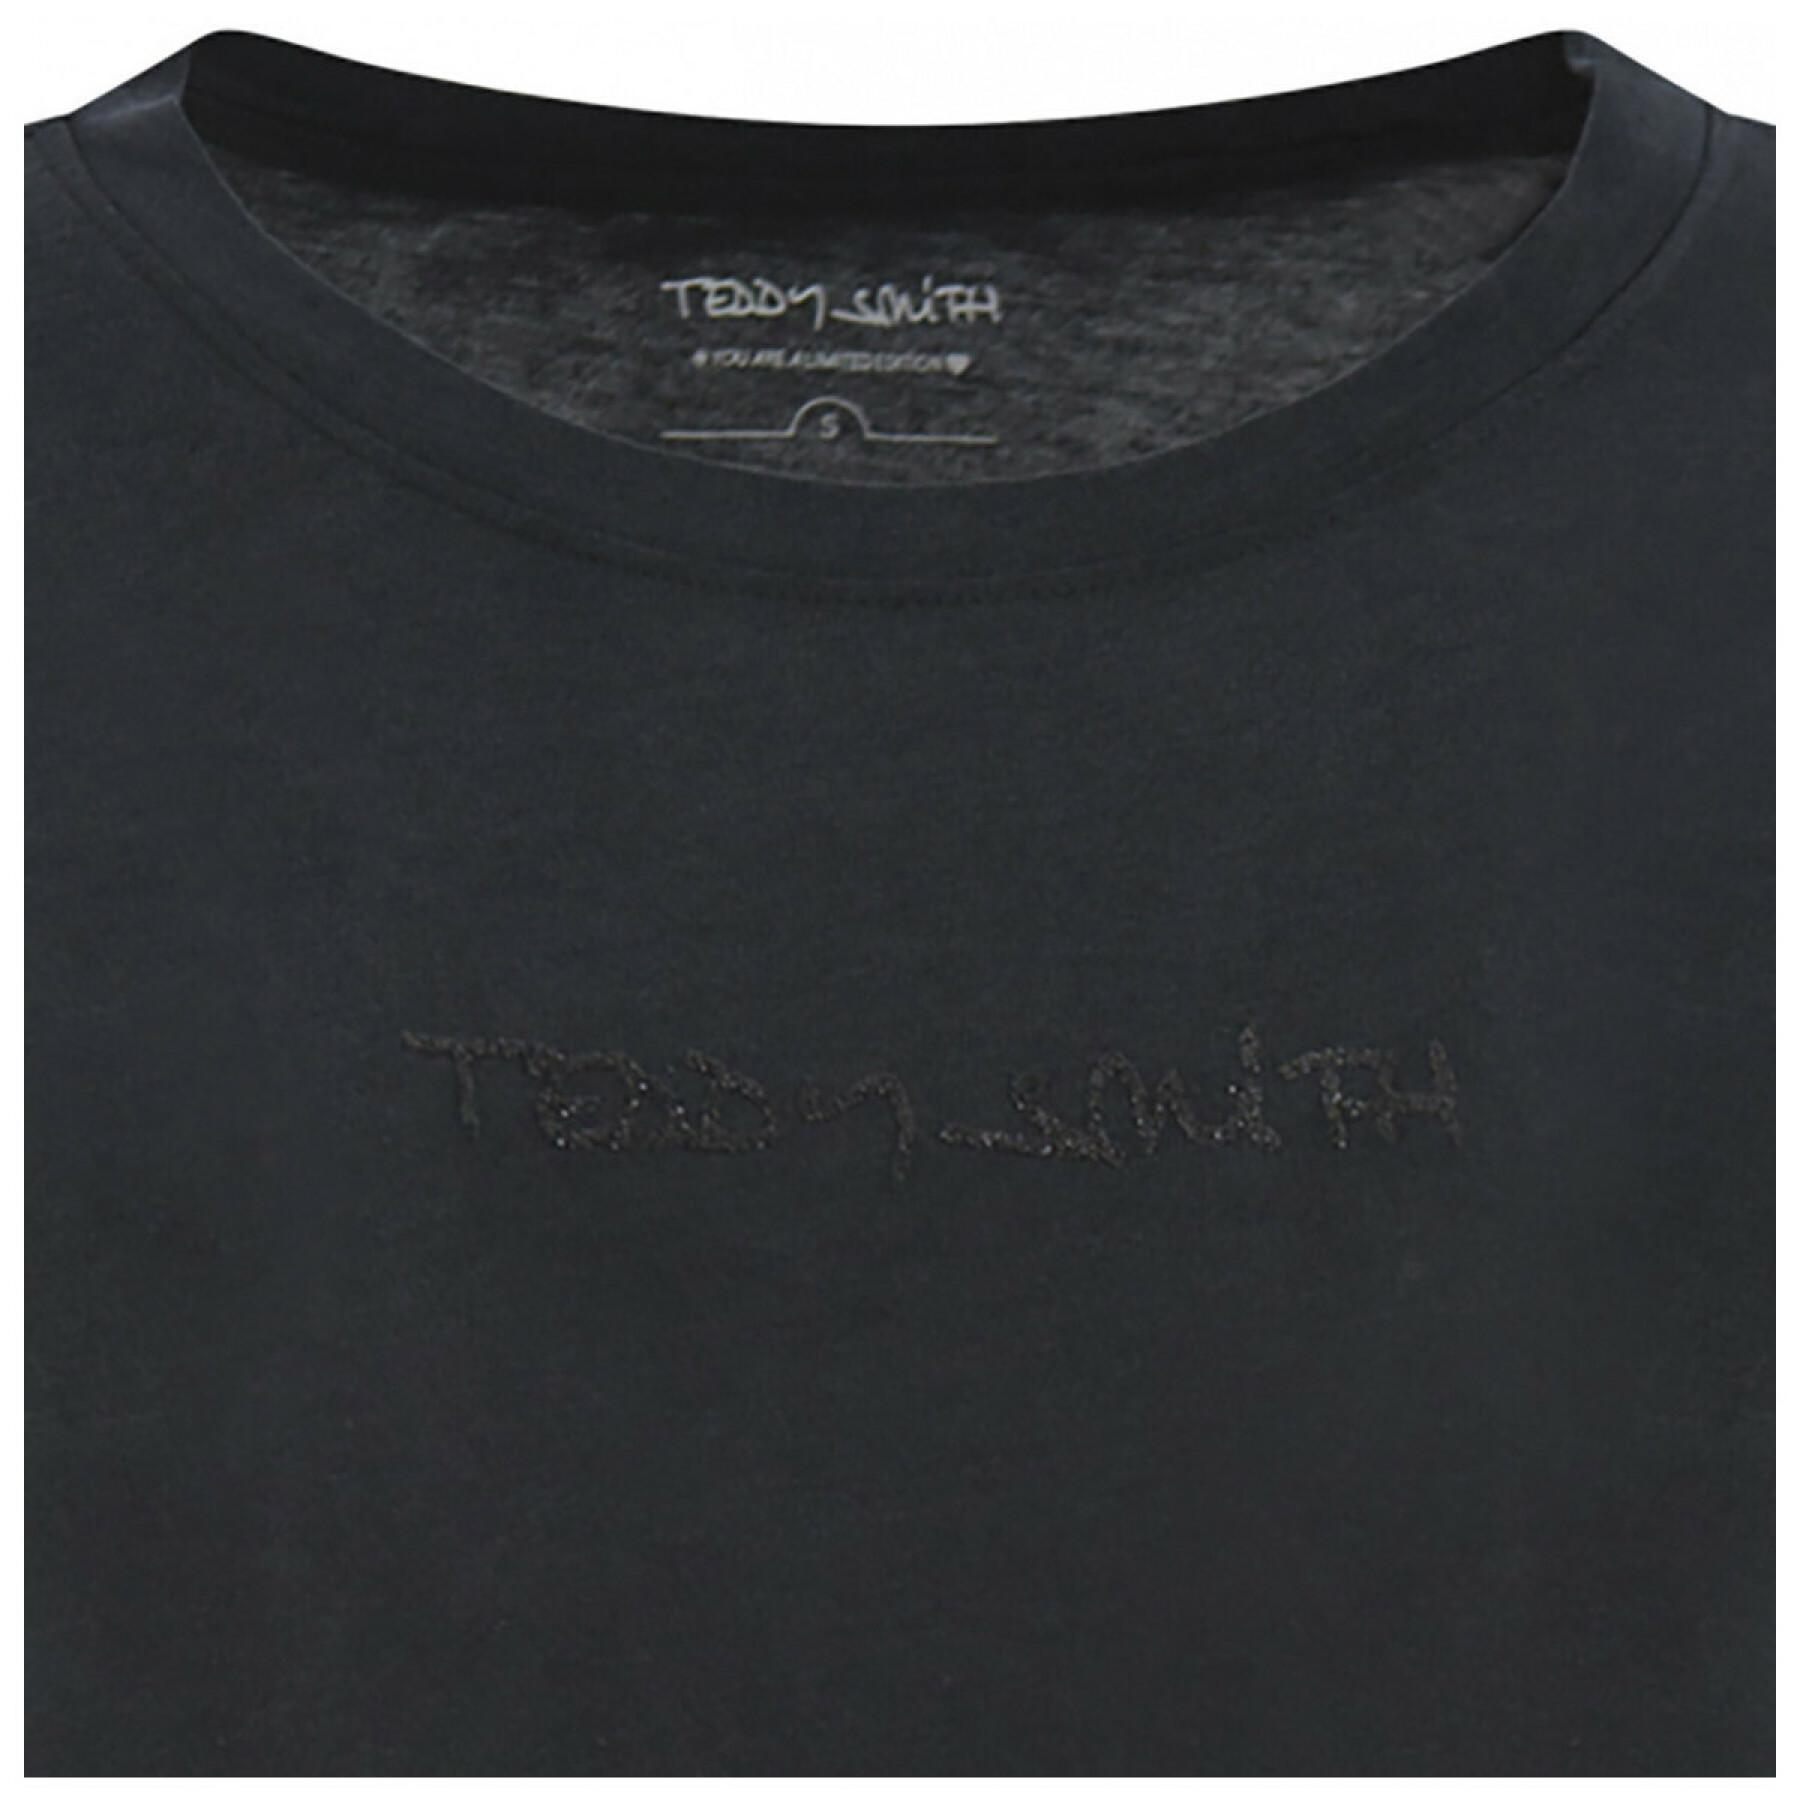 Camiseta de mujer Teddy Smith Ticia